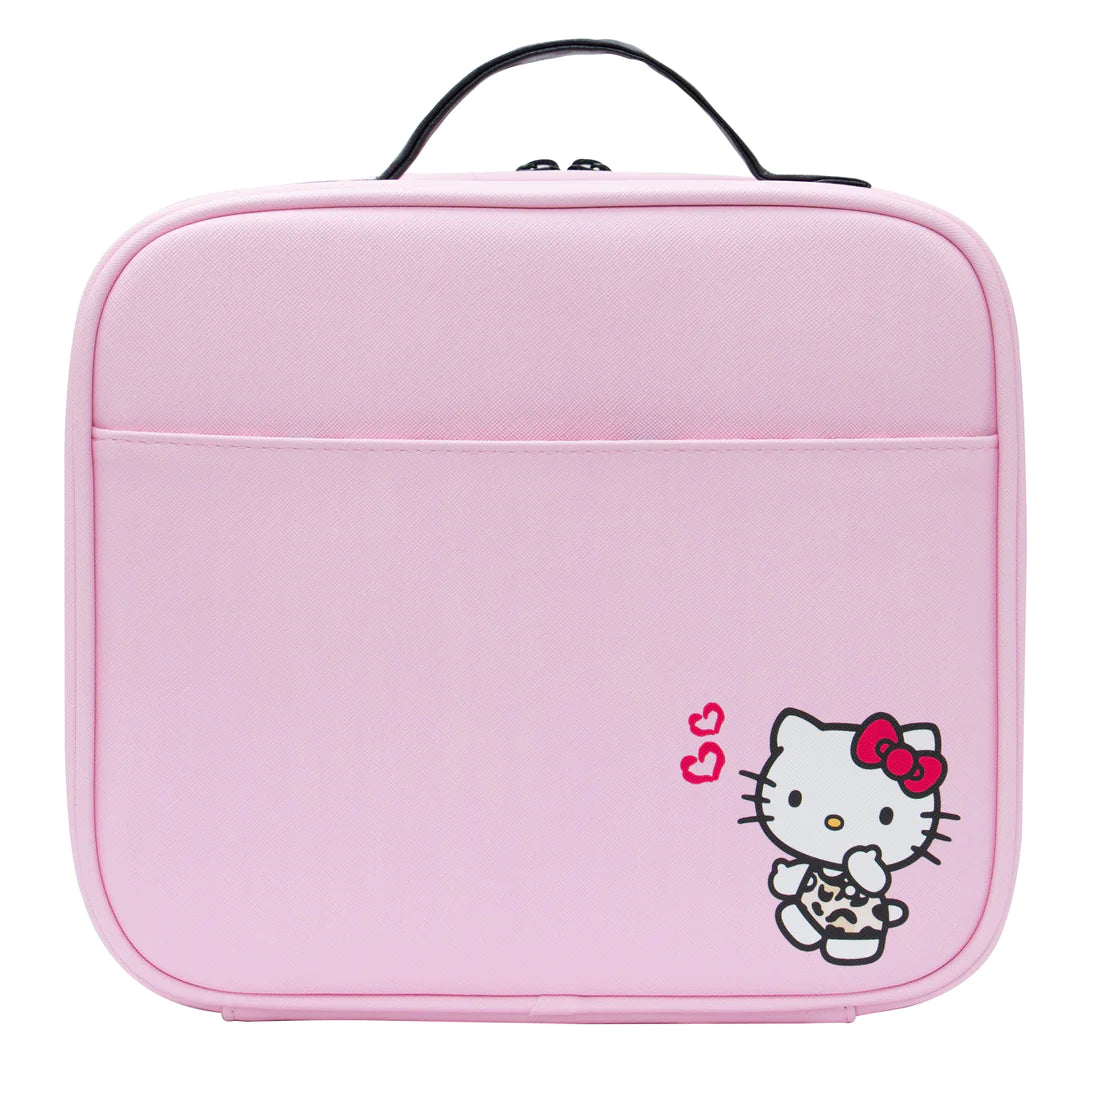 Impressions Vanity - Hello Kitty Cosmetic Bag Pink Animal